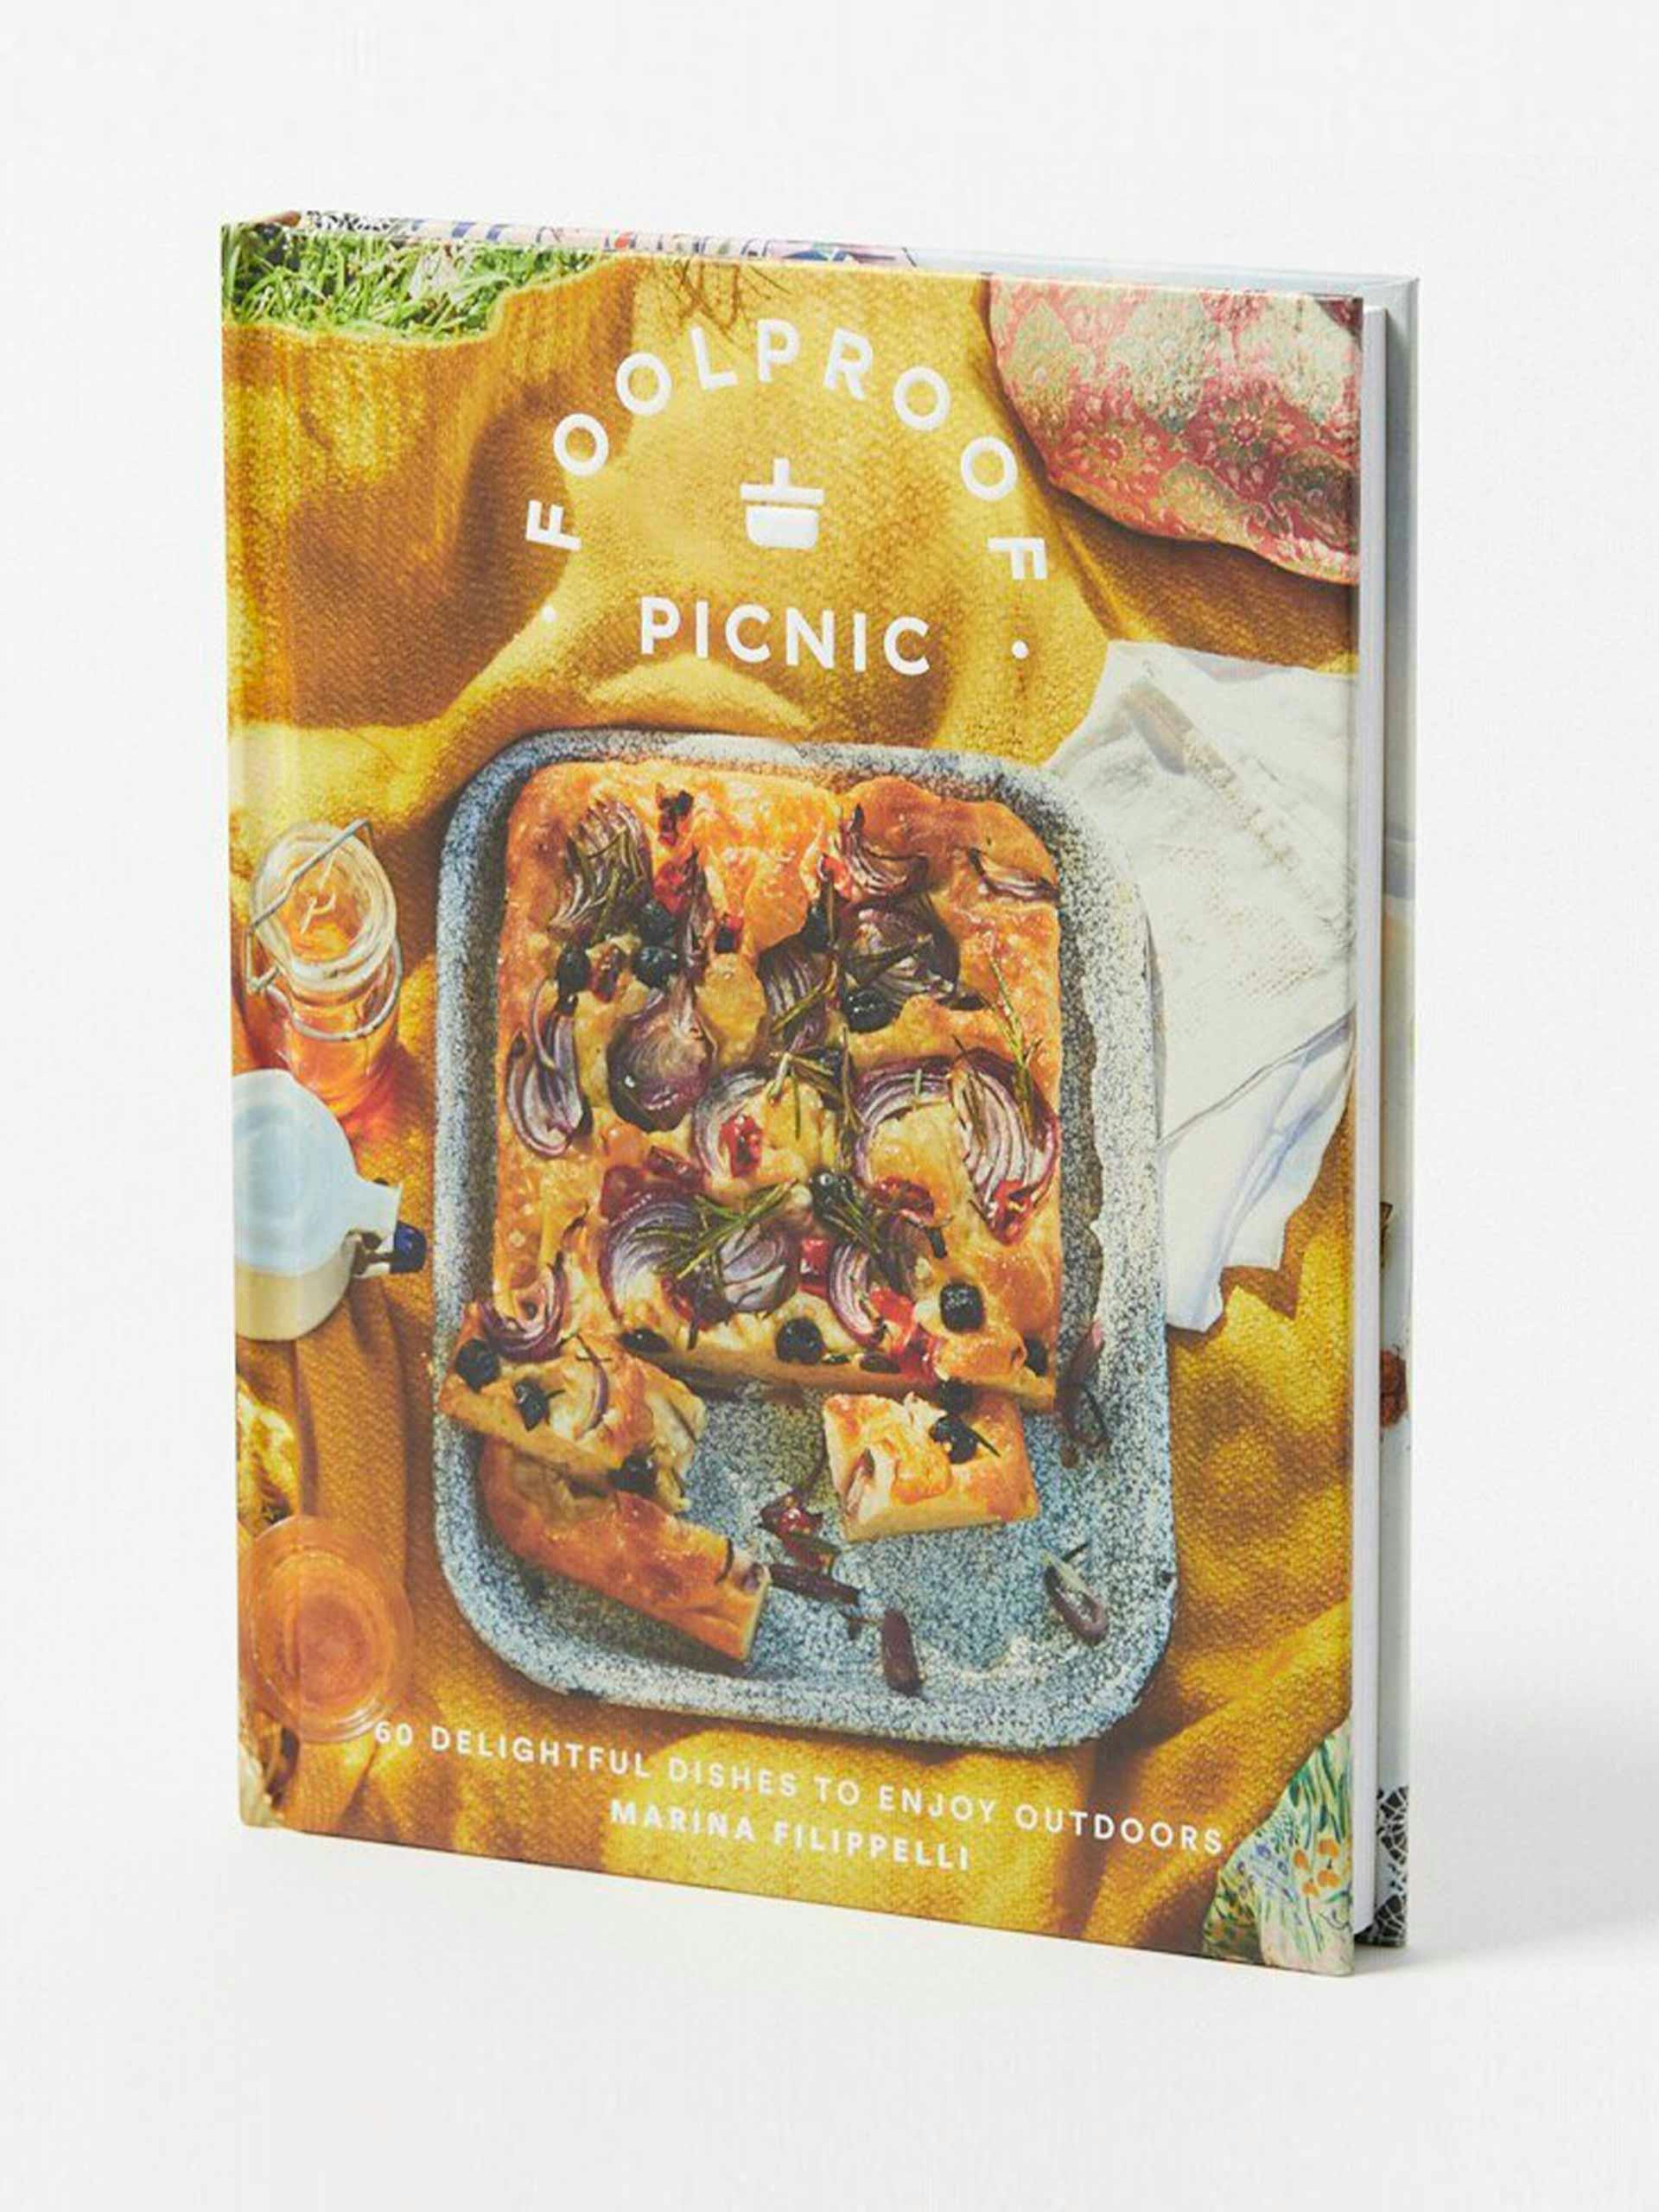 Picnic cookbook